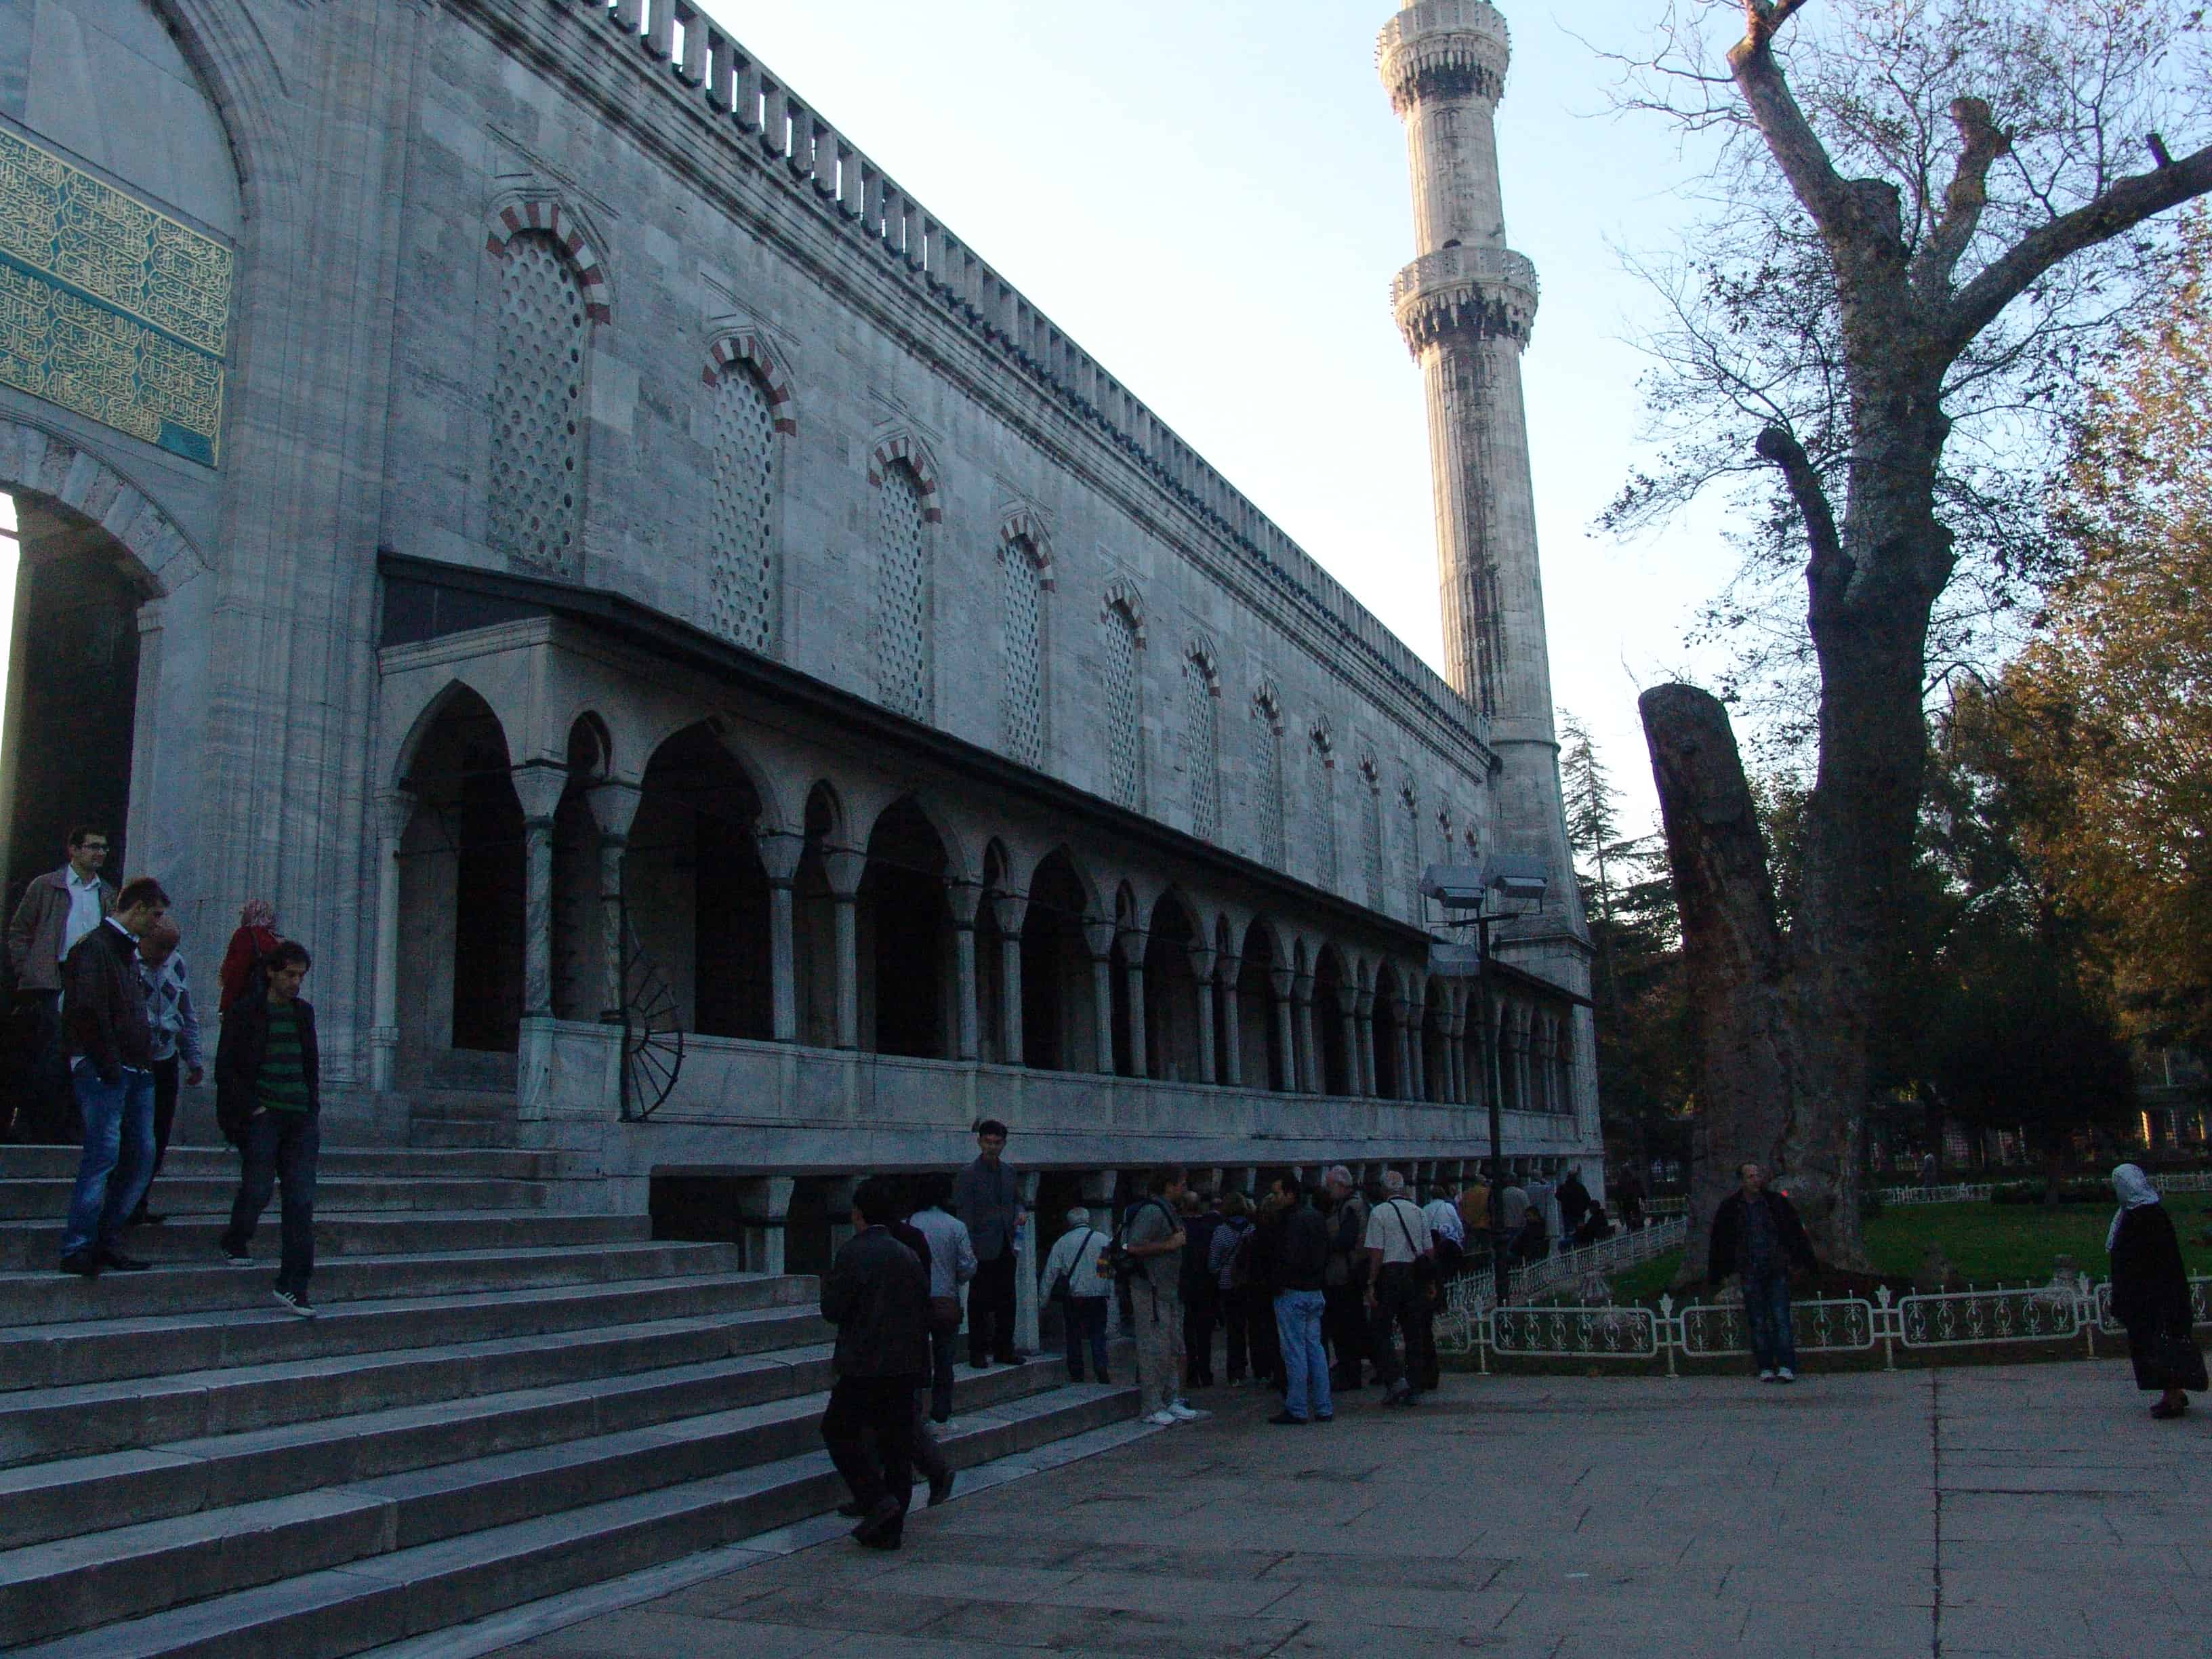 Sultan Ahmet Camii (Blue Mosque) in Fatih, Istanbul, Turkey